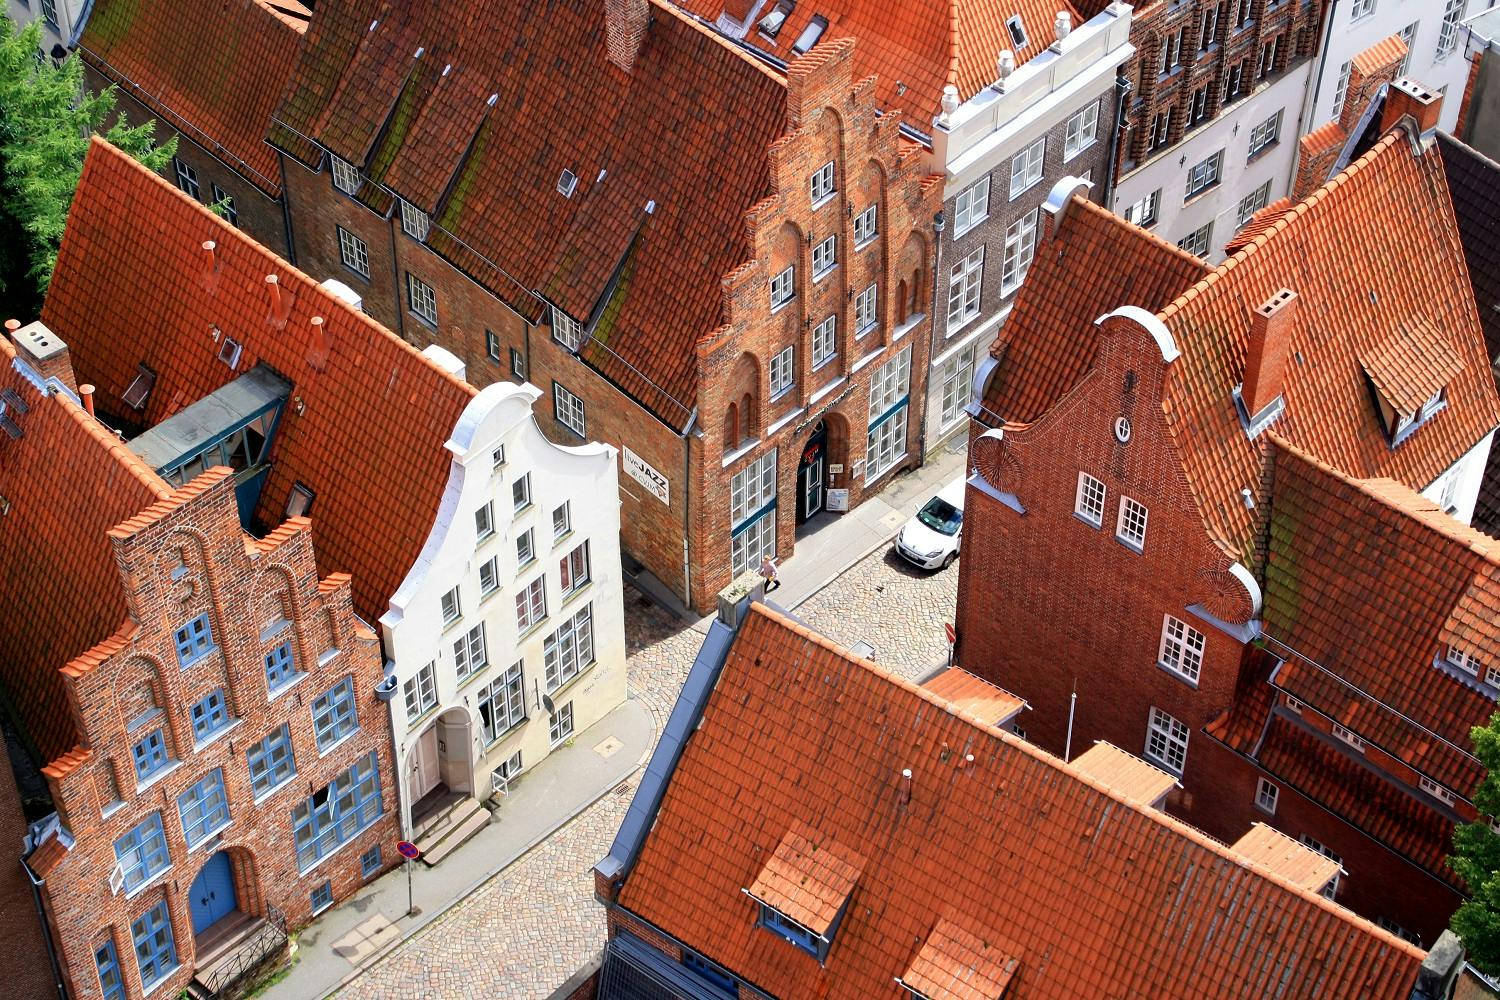 Hanseatic architecture private walking tour in Lübeck